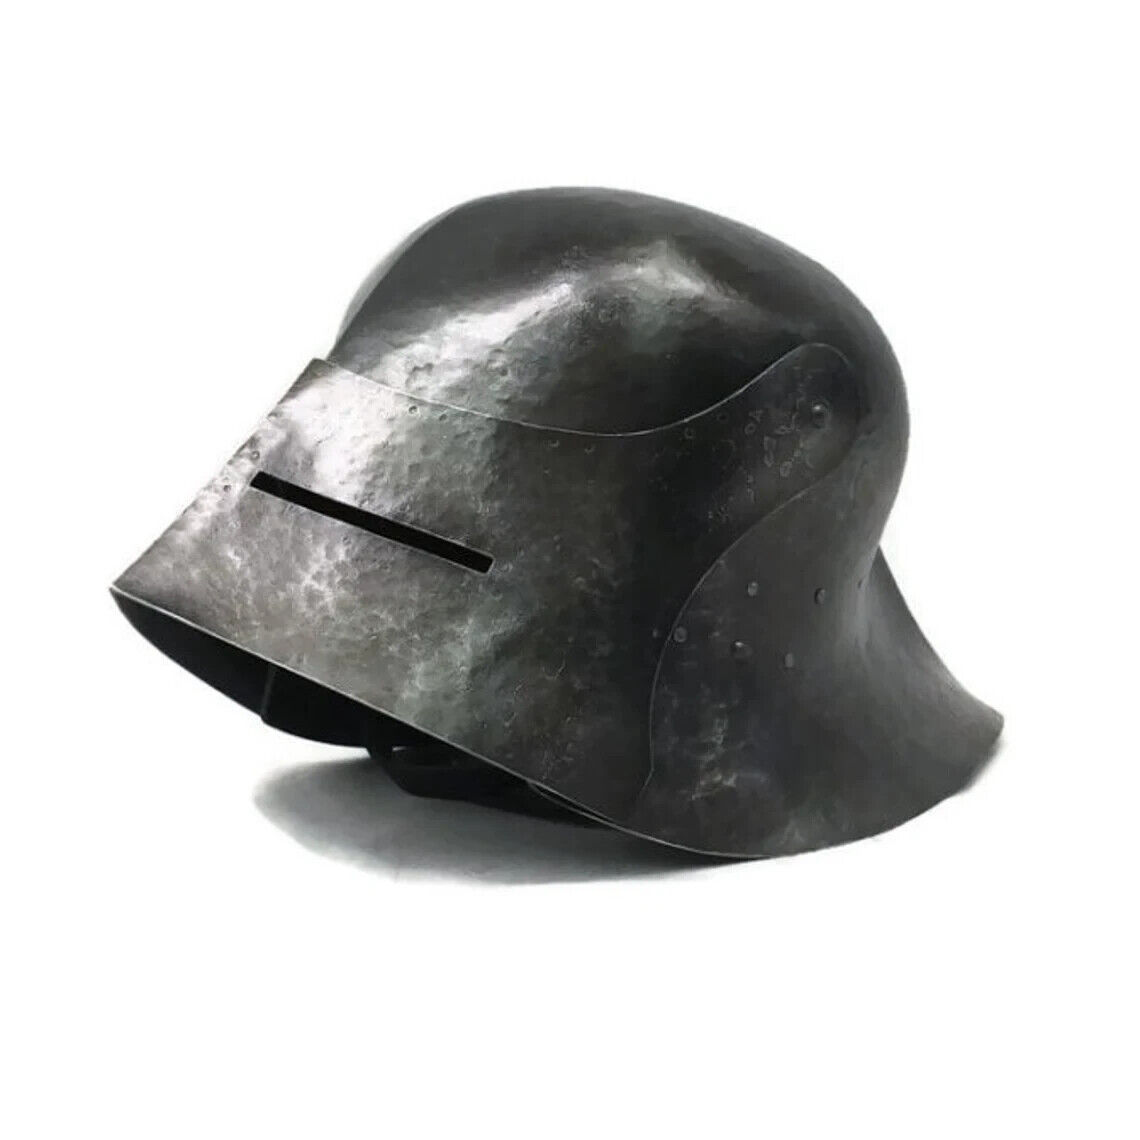 Medieva Knight Steel Armor Helmet Larp Armor, Medieval German Black Sallet